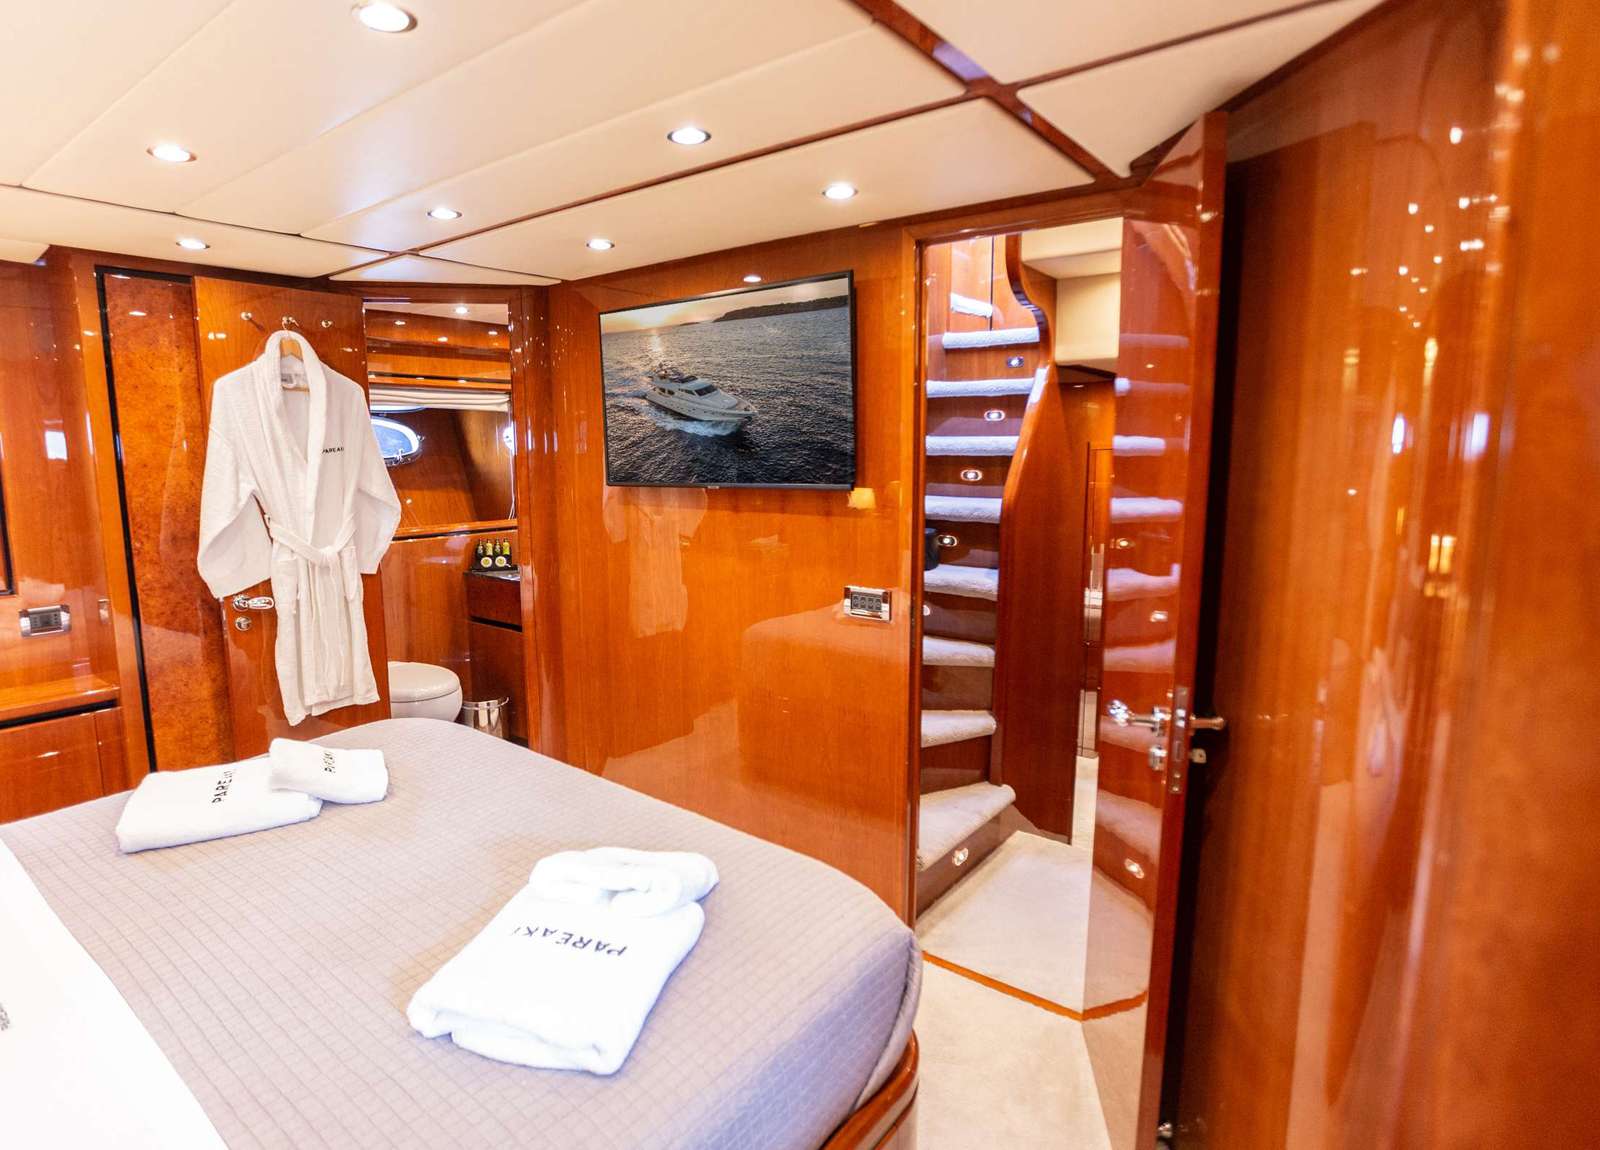 vip cabin luxury yacht possilipo 80 pareaki